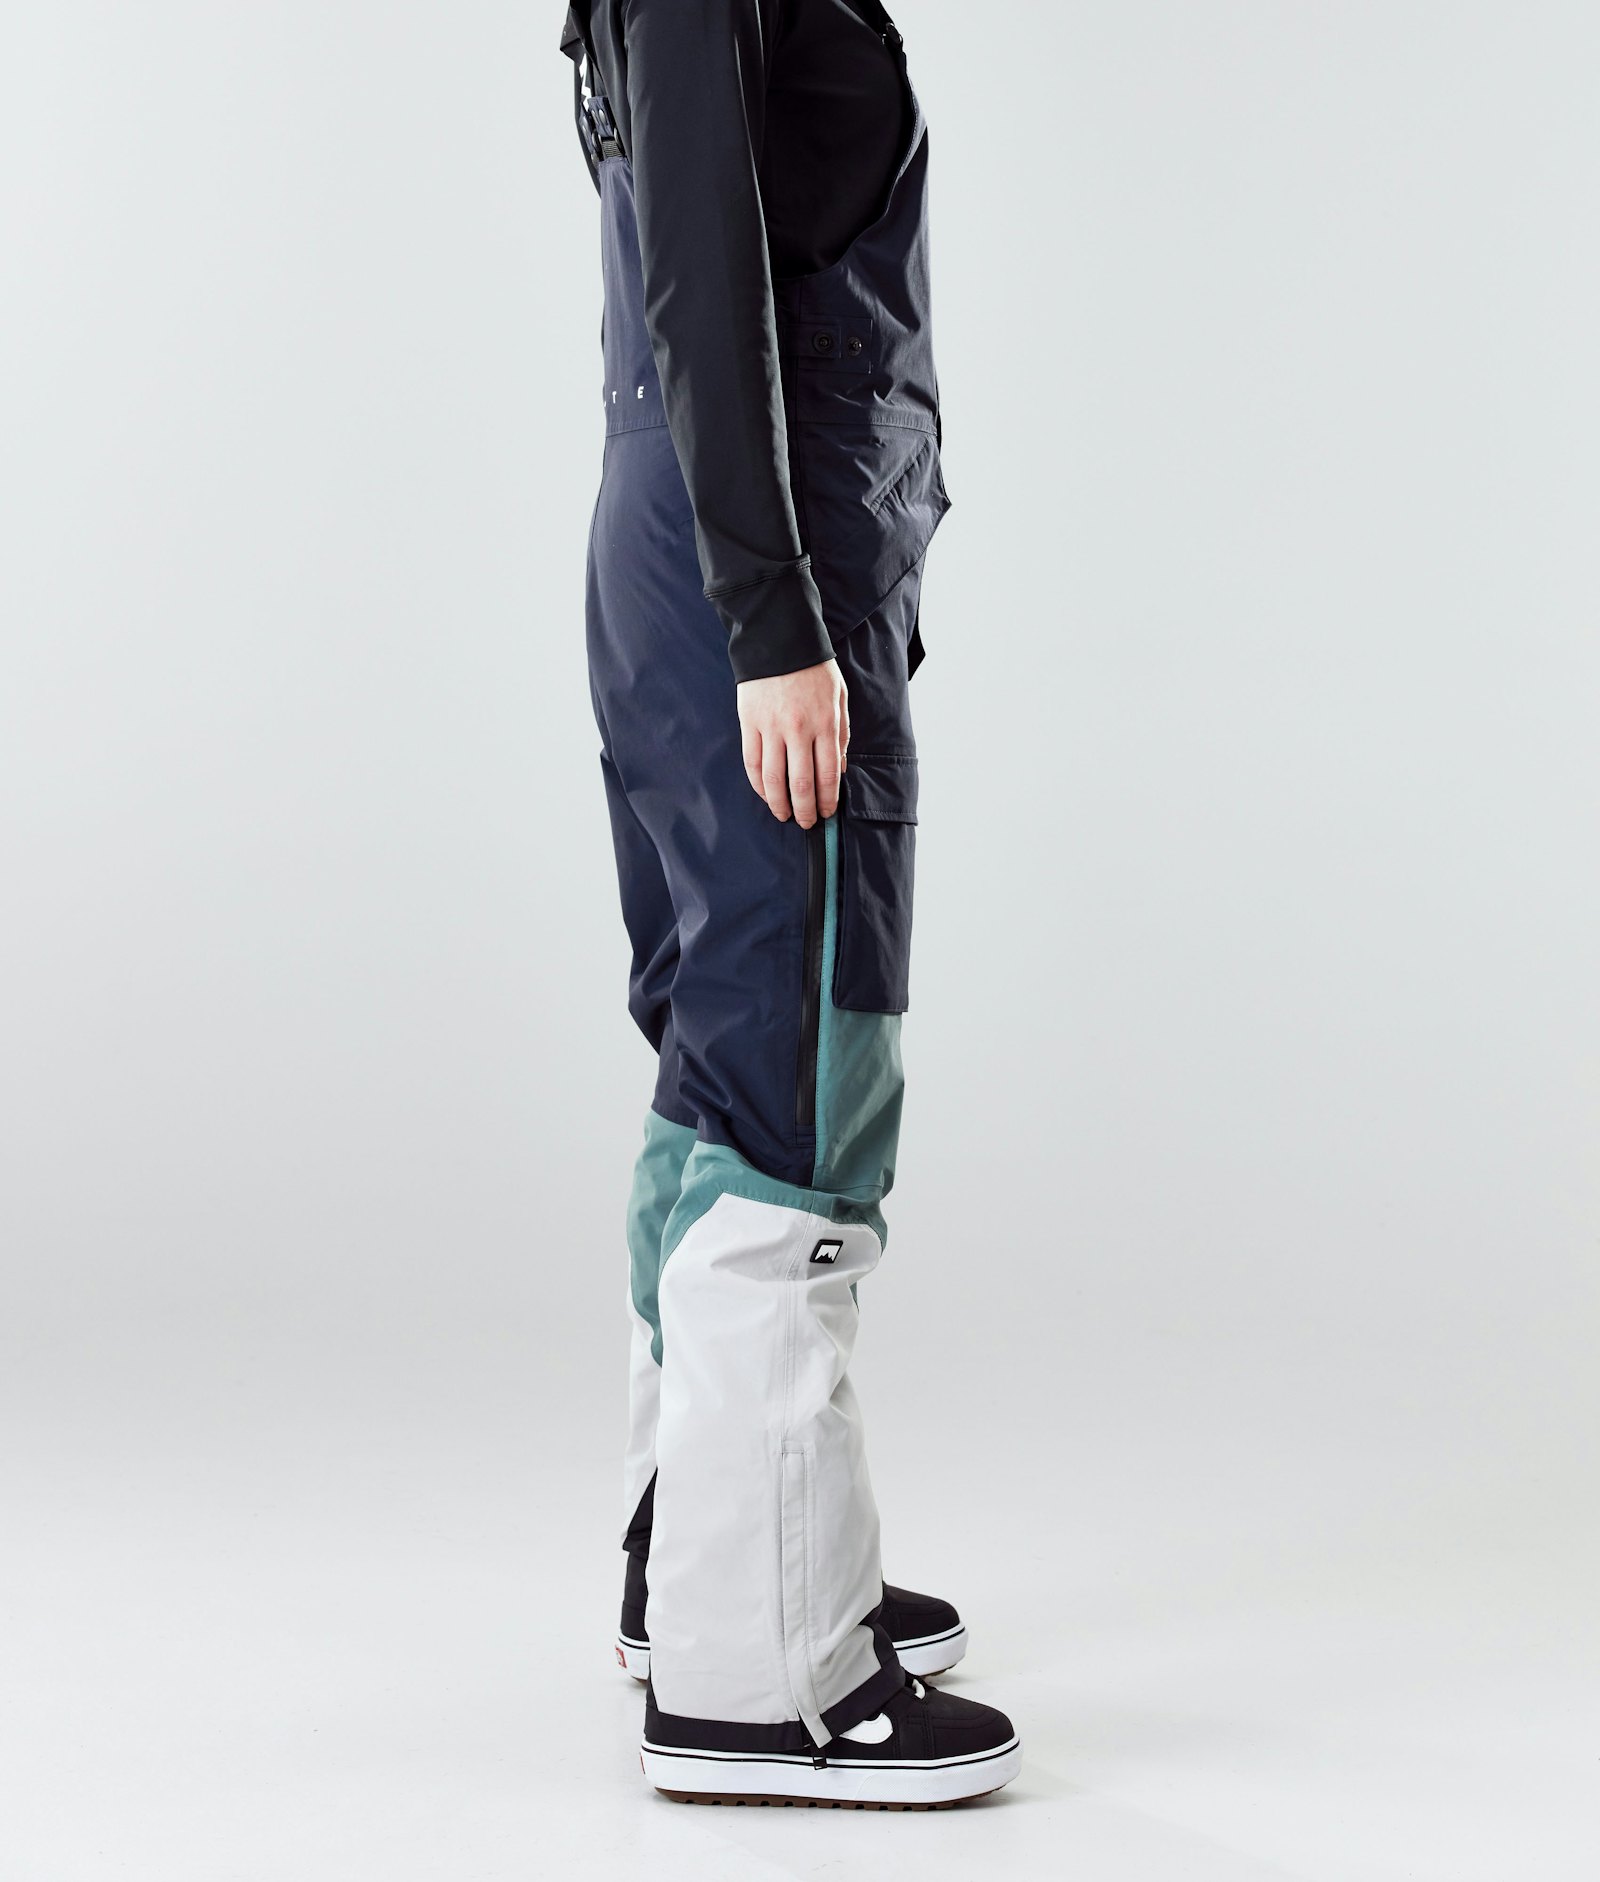 Fawk W 2020 Snowboardhose Damen Marine/Atlantic/Light Grey